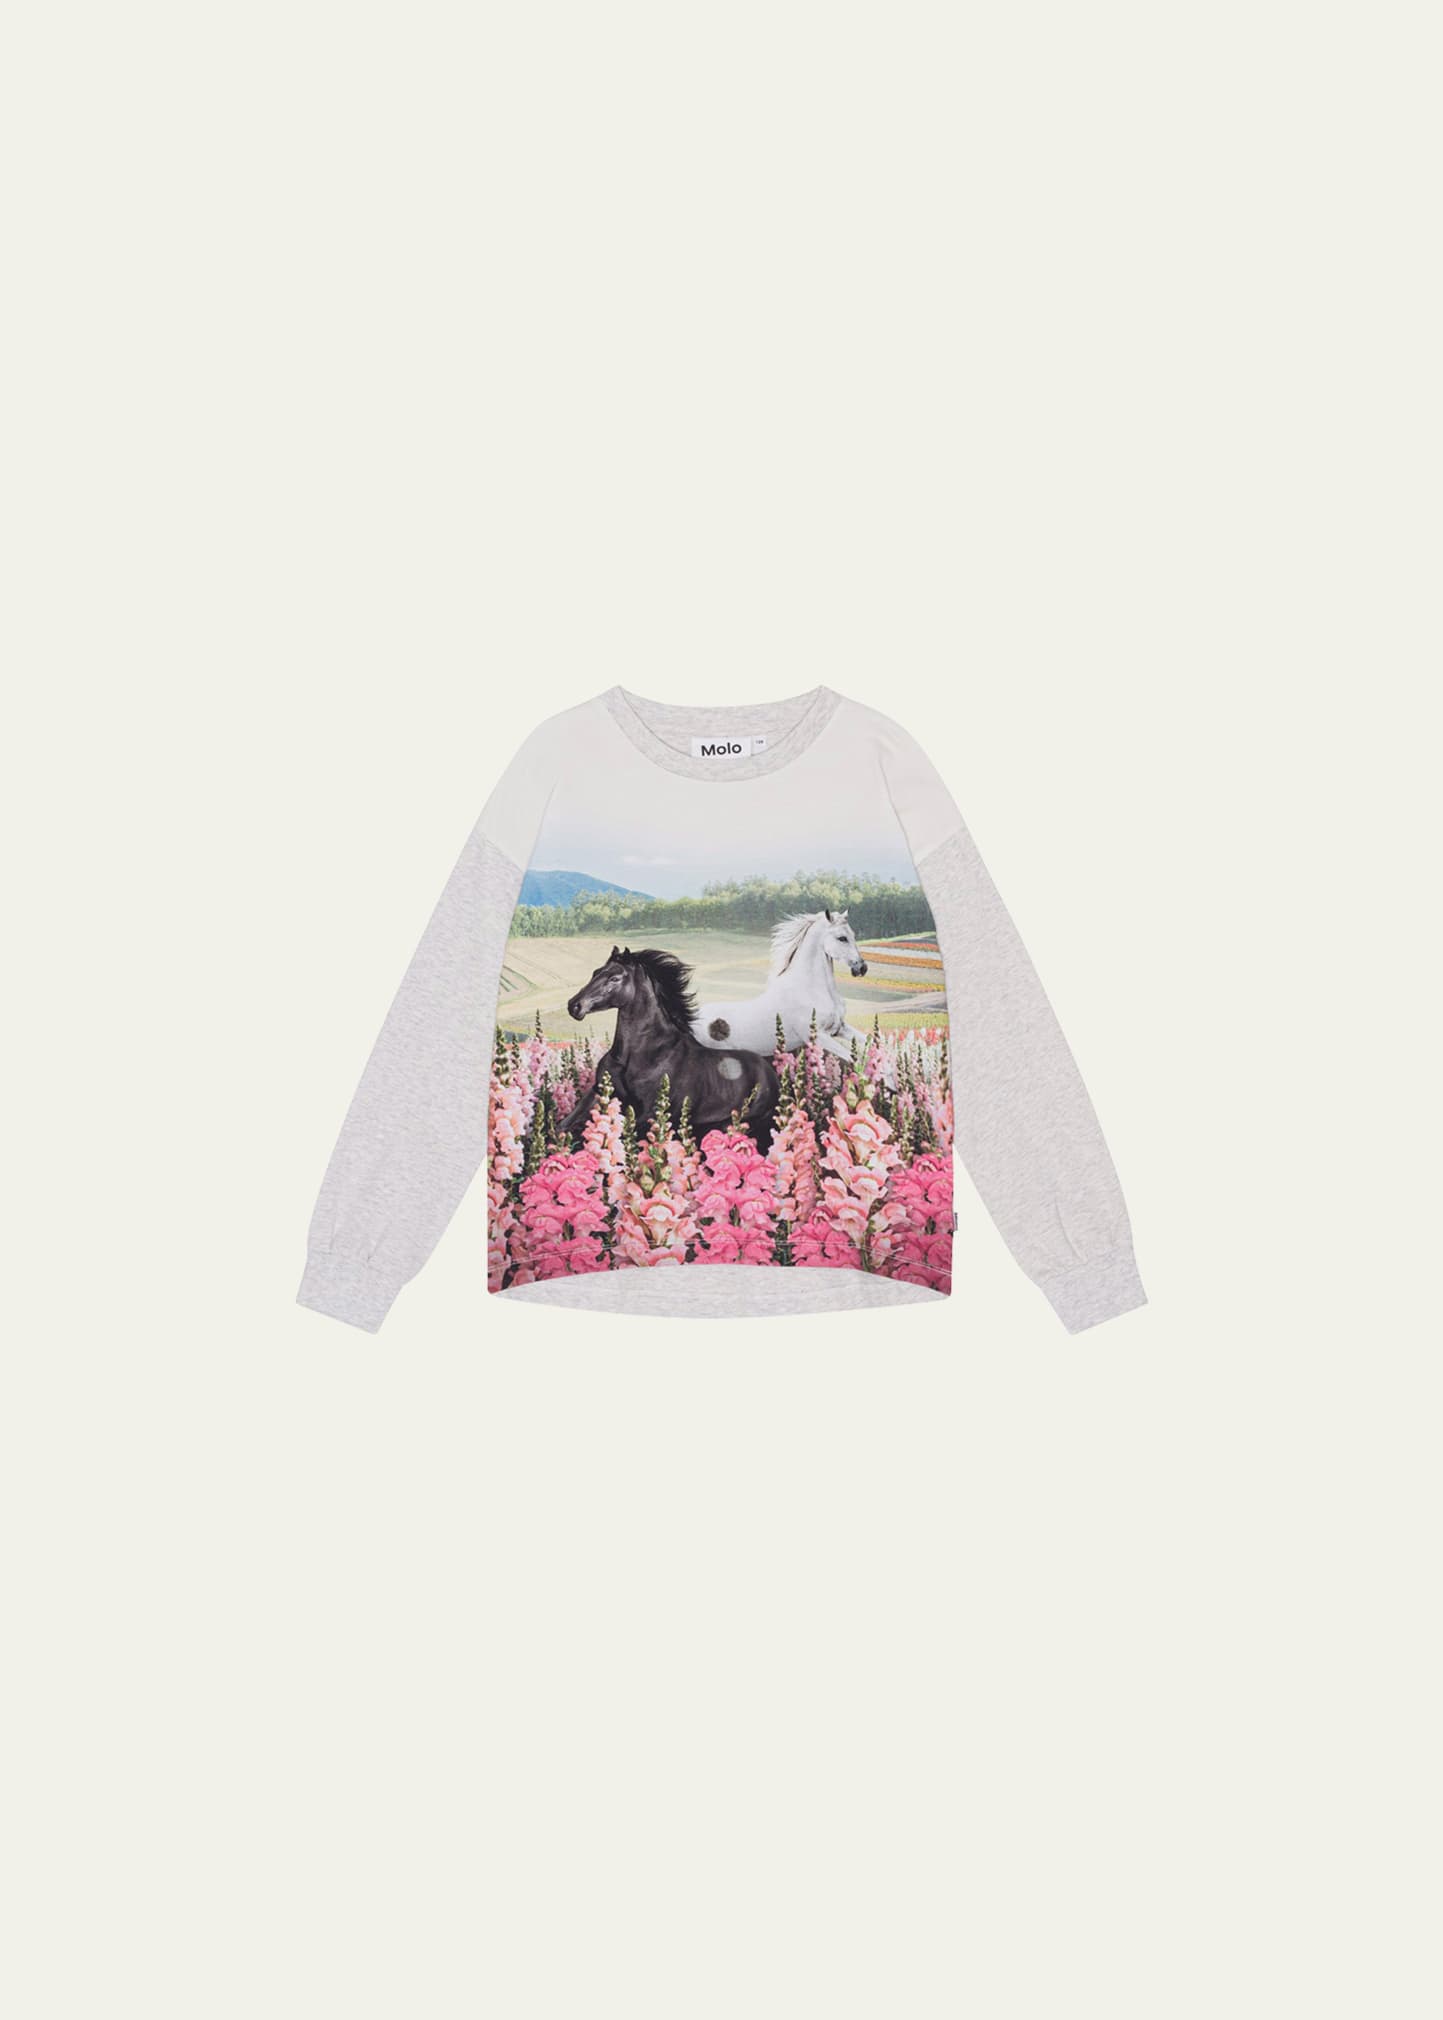 Girl's Reniza Horse Graphic Sweatshirt, Size 8-14